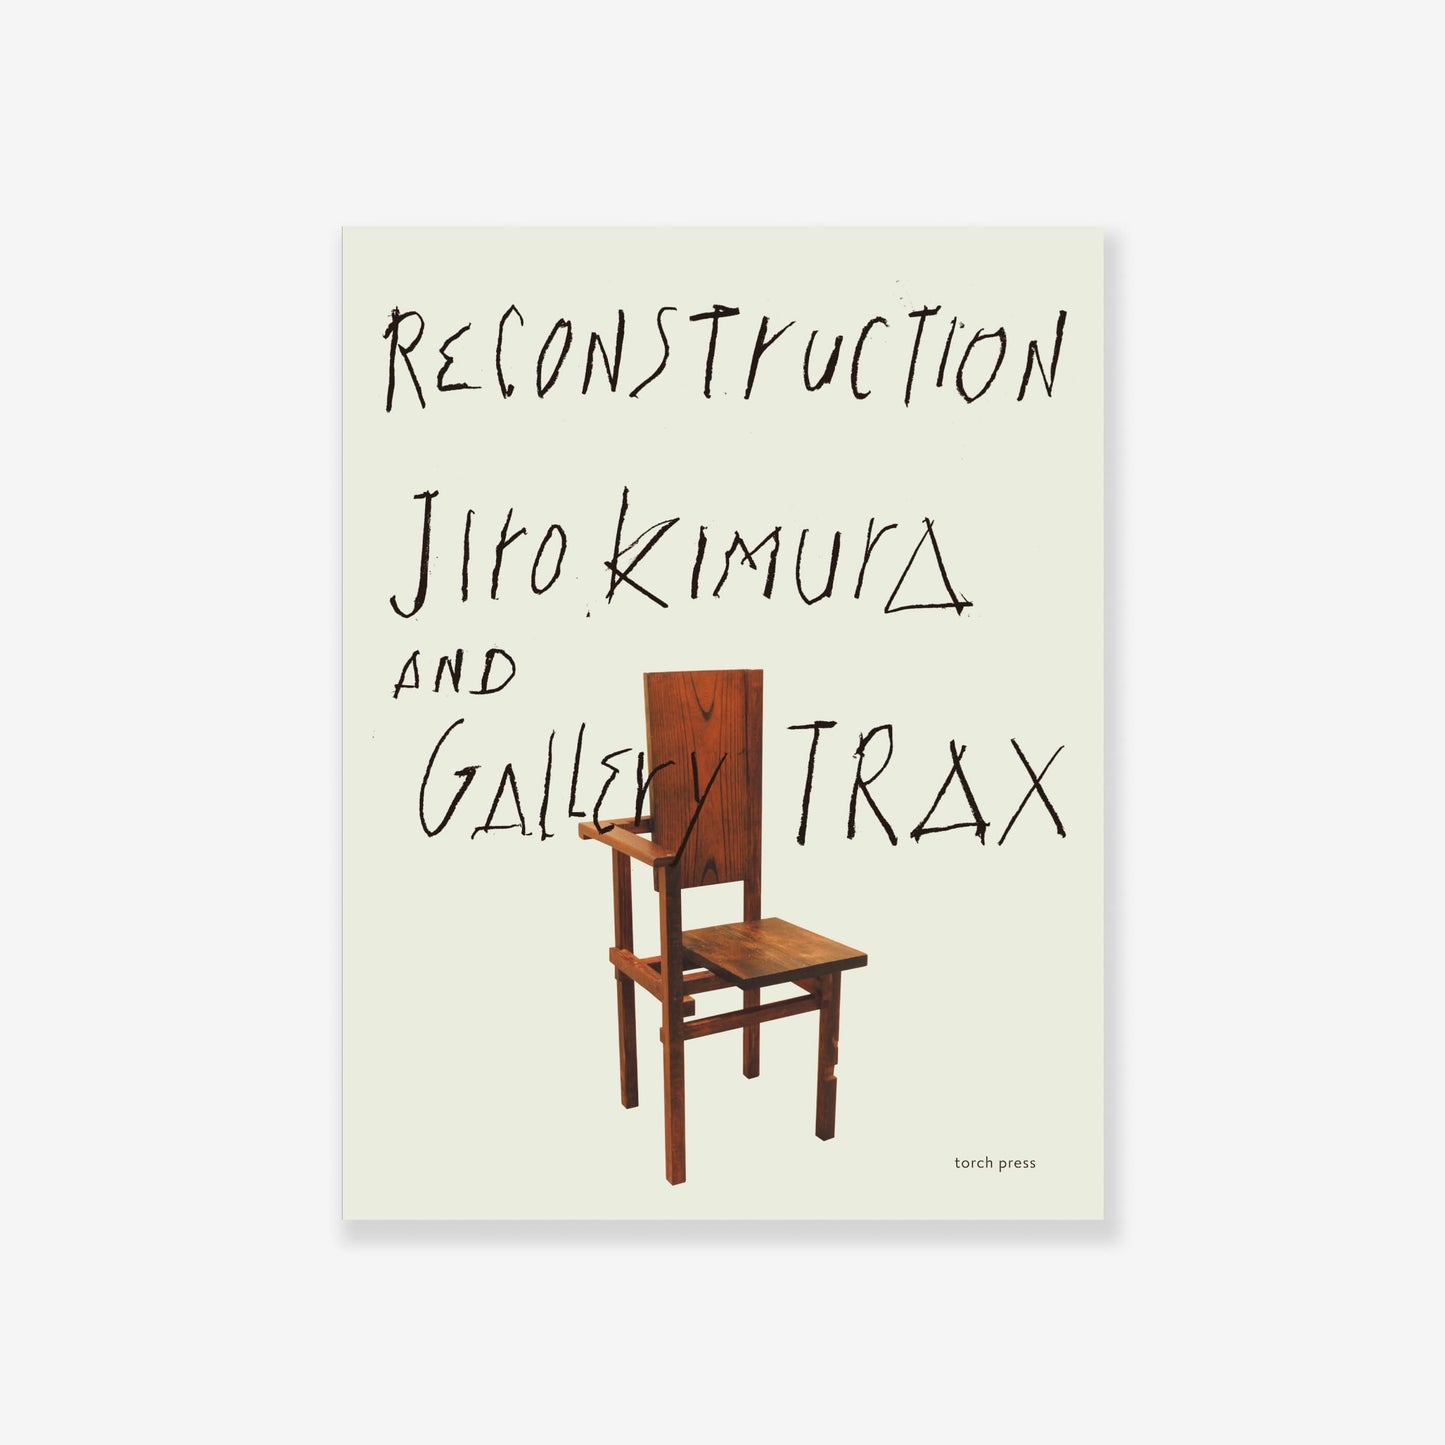 ReConstruction | Jiro Kimura and Gallery Trax